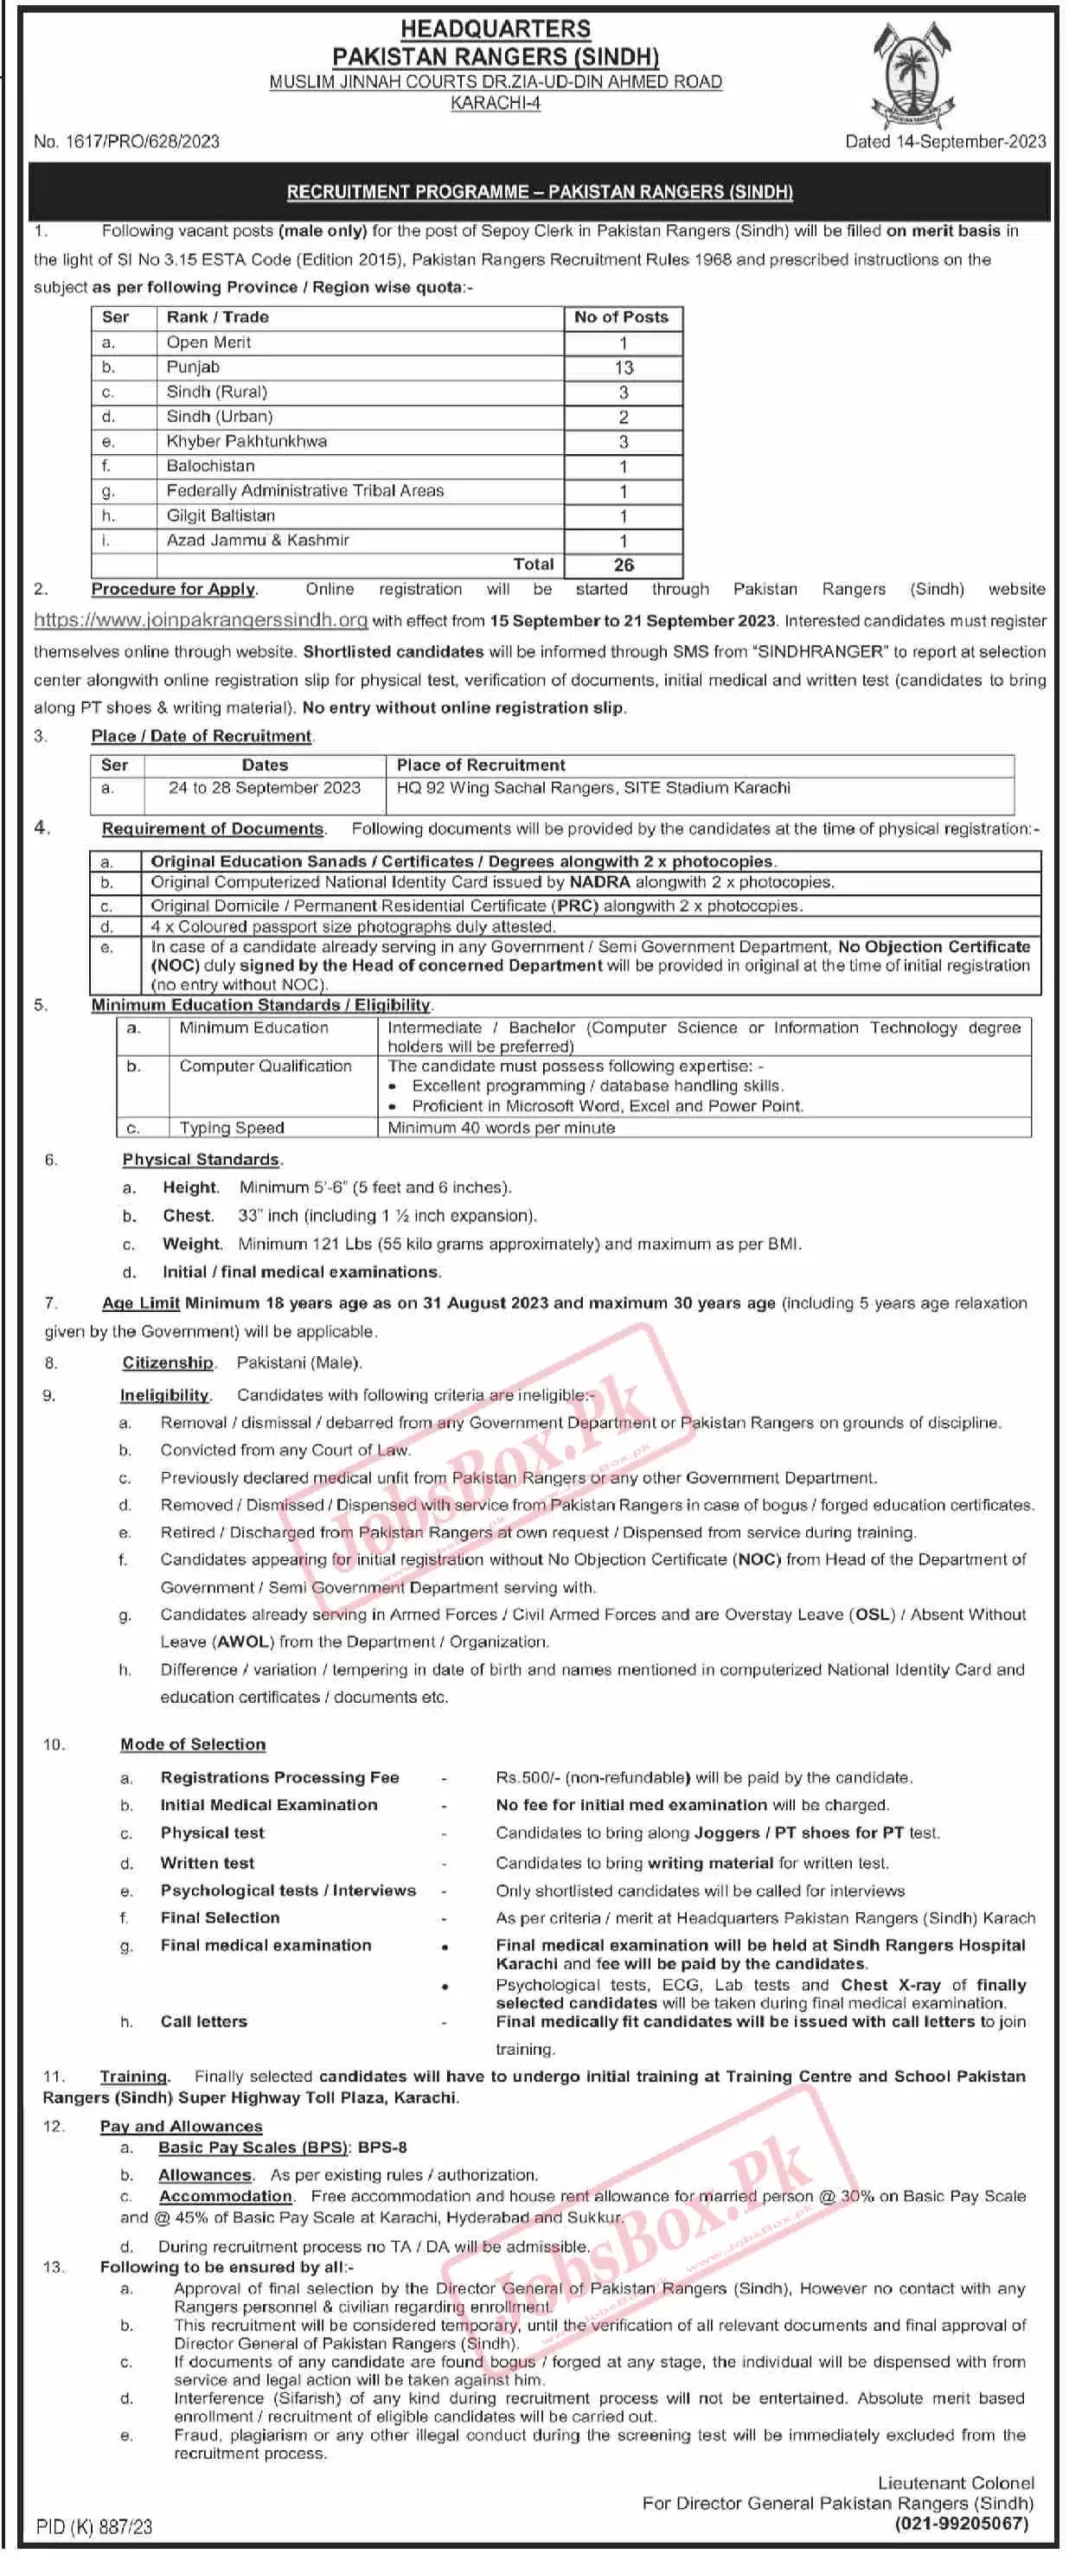 Pakistan Rangers Jobs 2023 Latest Advertisement - Govt job in Pakistan